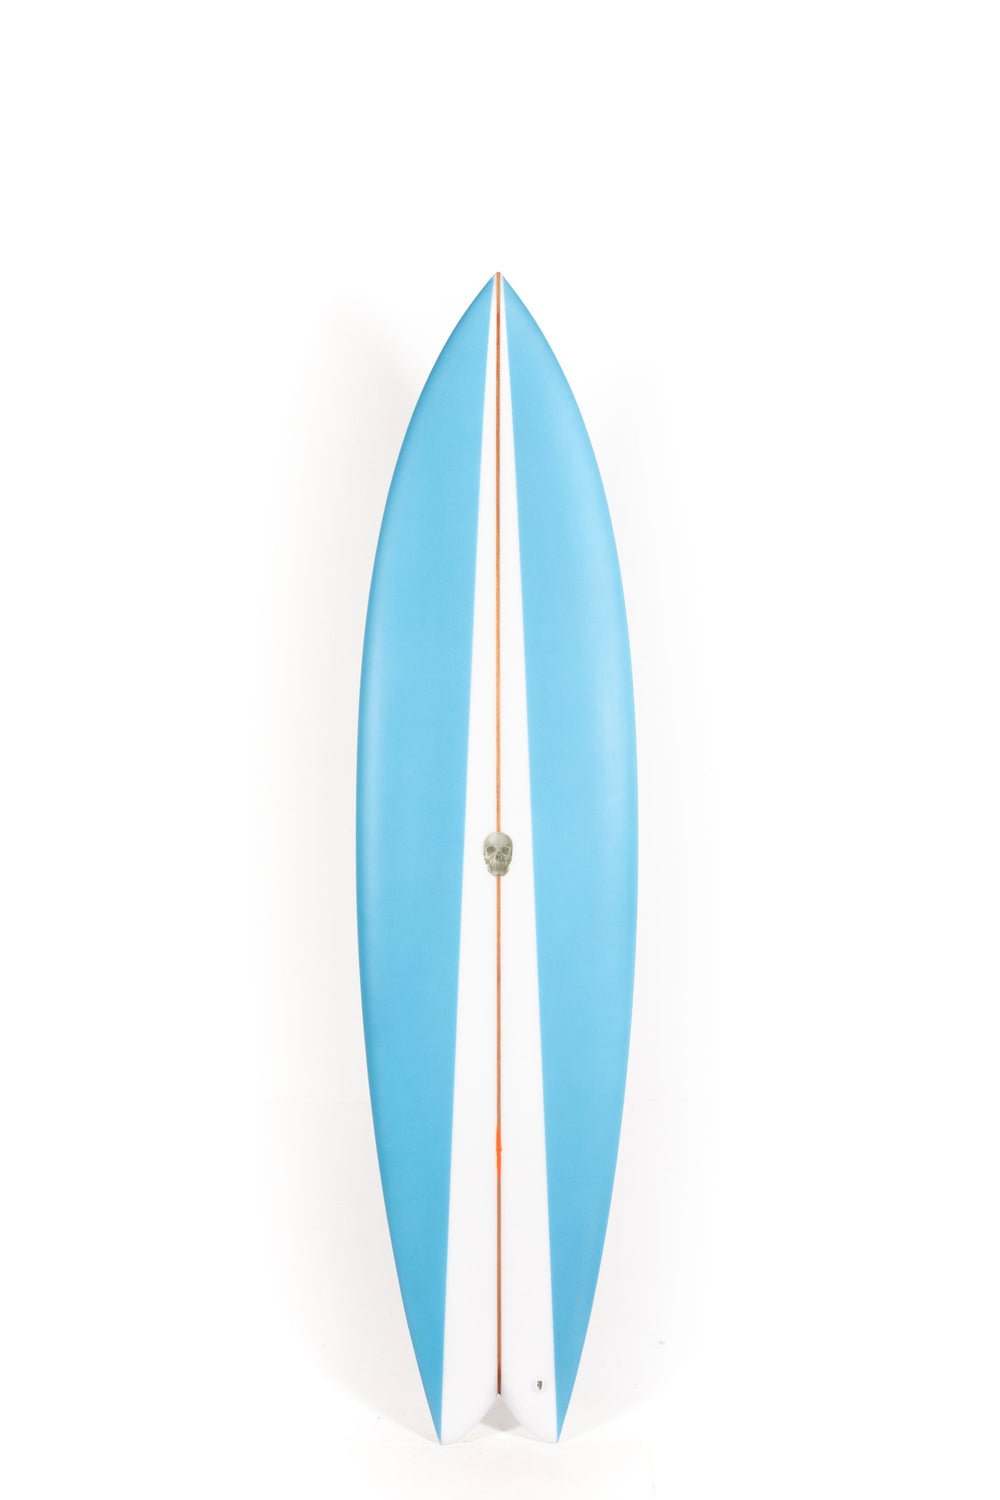 Pukas Surf Shop - Christenson Surfboards - NAUTILUS - 7'4